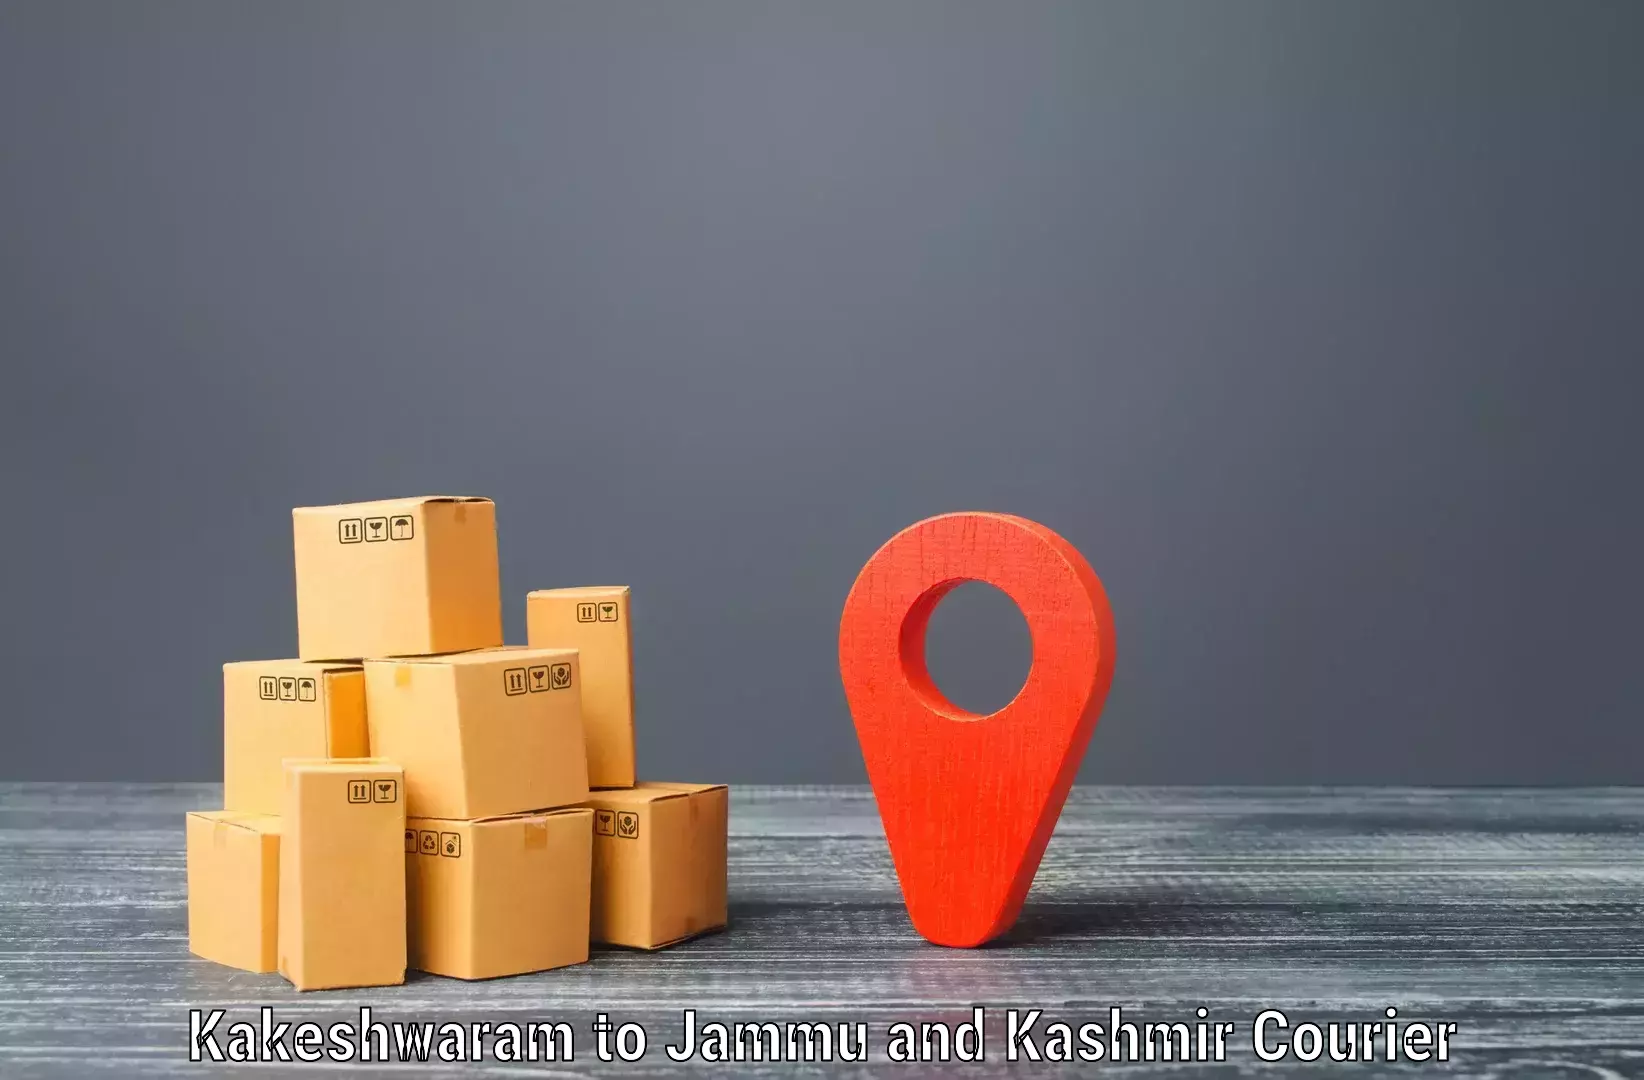 Affordable parcel service Kakeshwaram to Nagrota